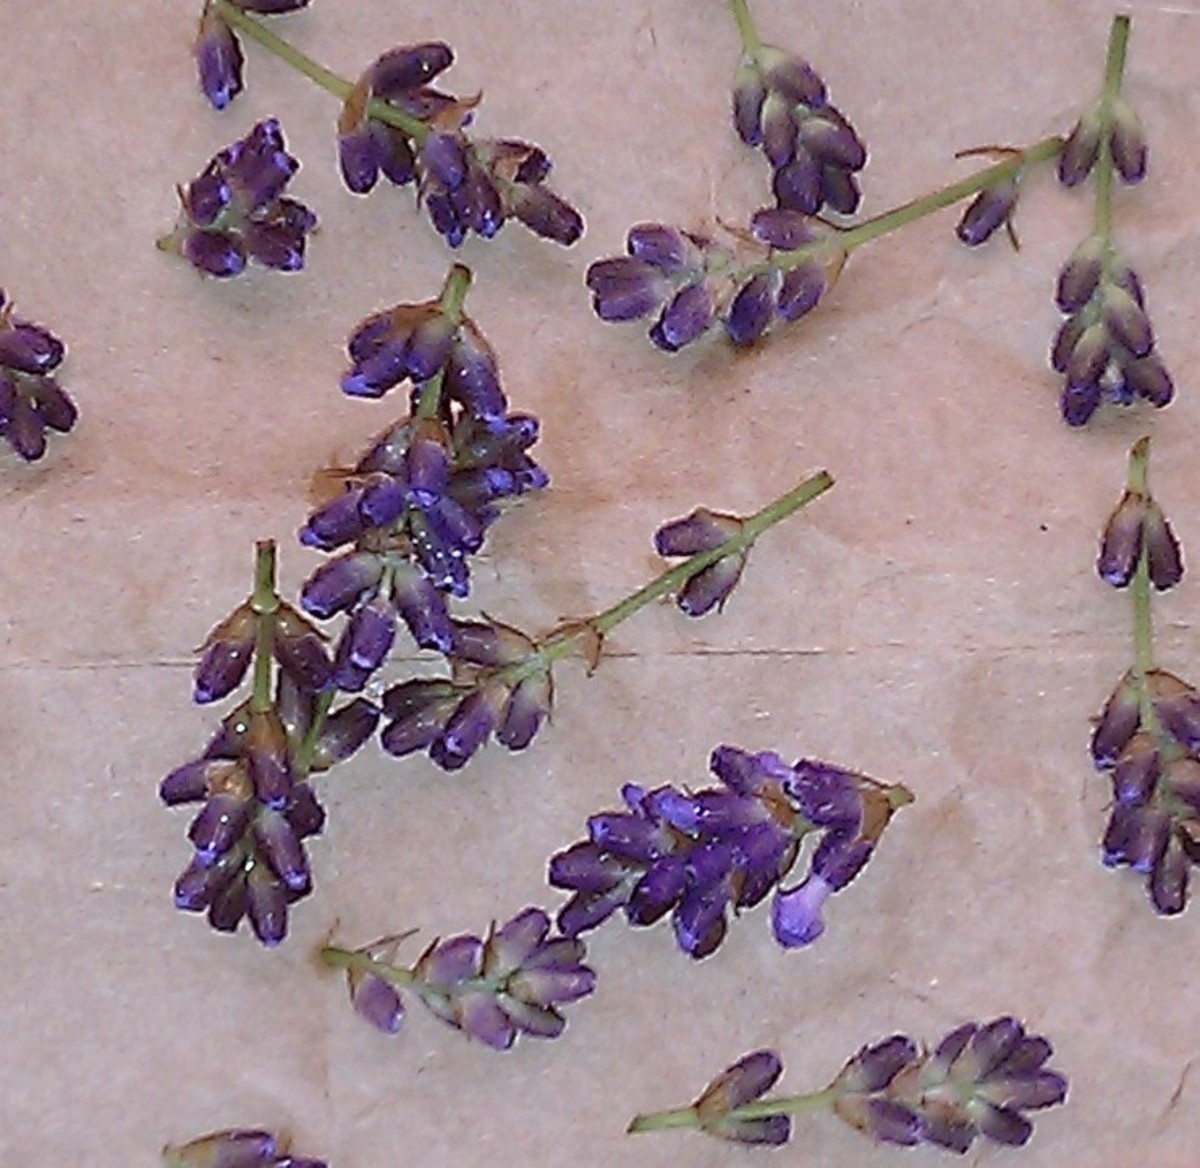 How to Prepare, Brew, and Steep Herbal Lavender Tea